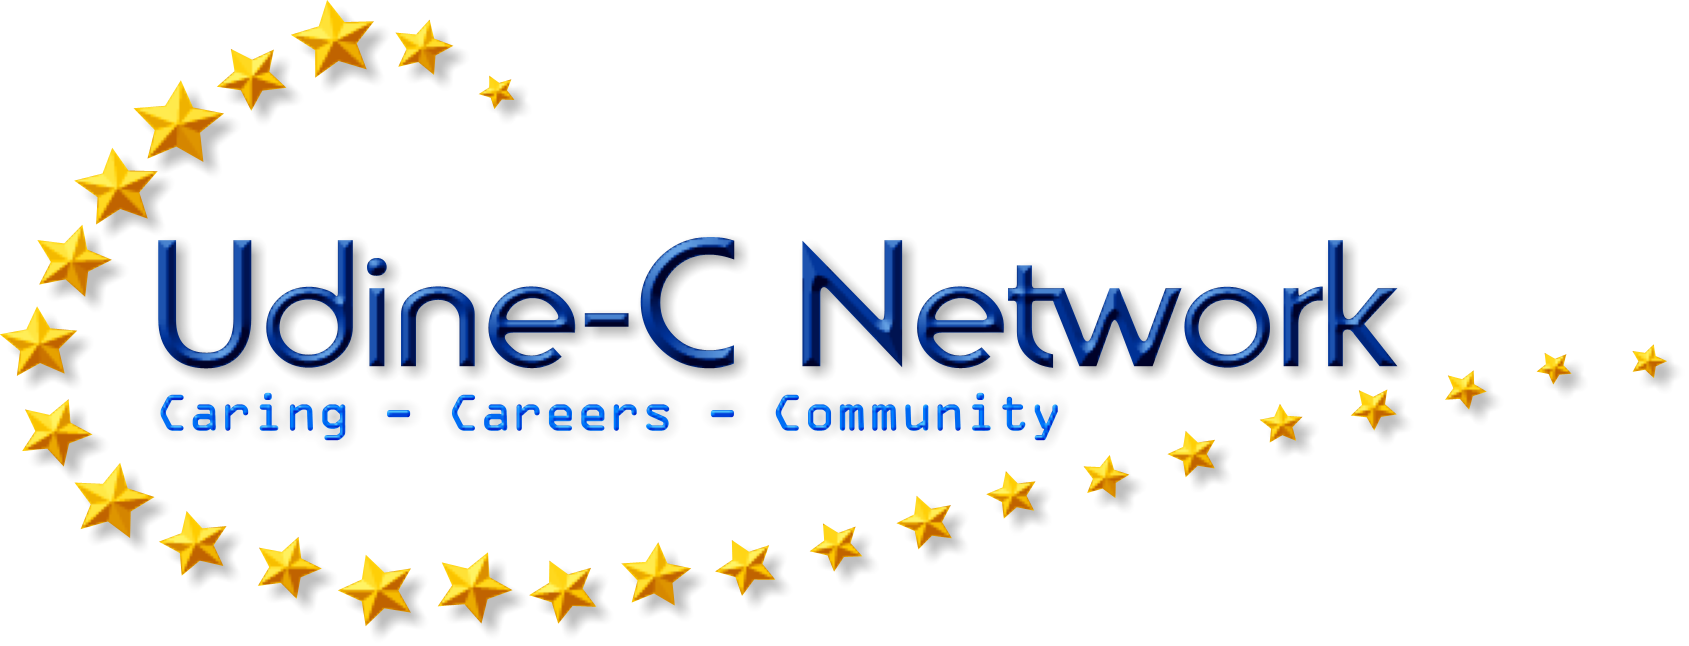 Udine-C Network